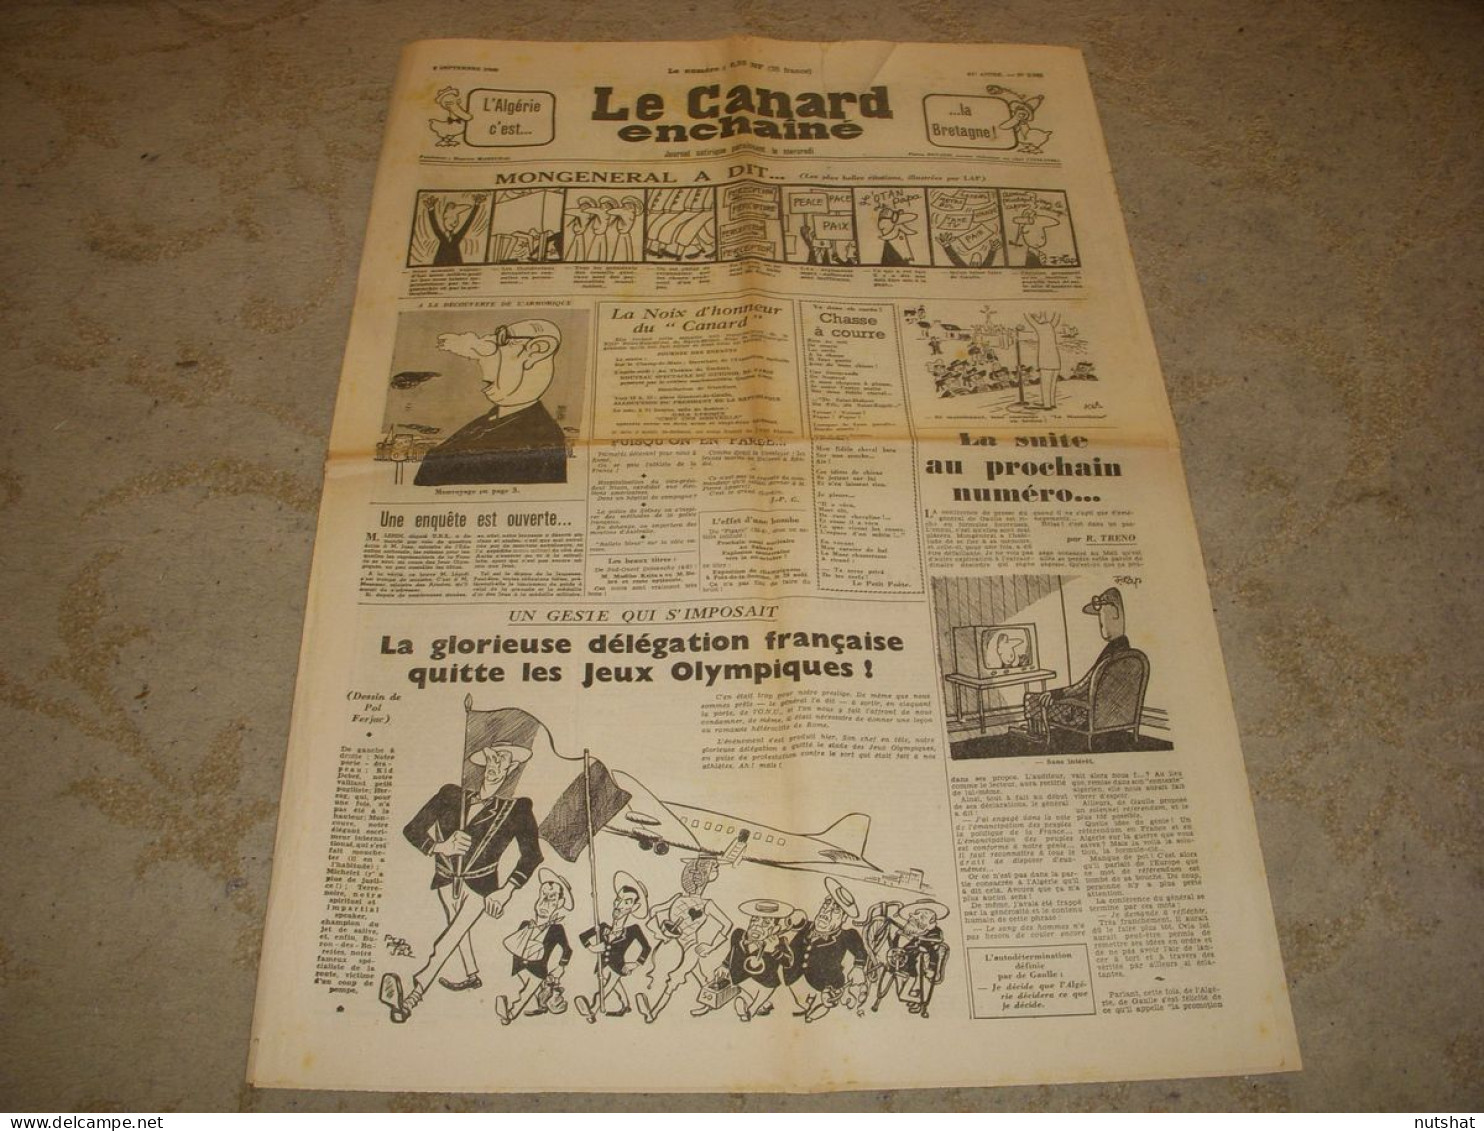 CANARD ENCHAINE 2081 07.09.1960 Jean NOHAIN Jean RIEUX Edna O'BRIEN L'OPUS DEI - Politics